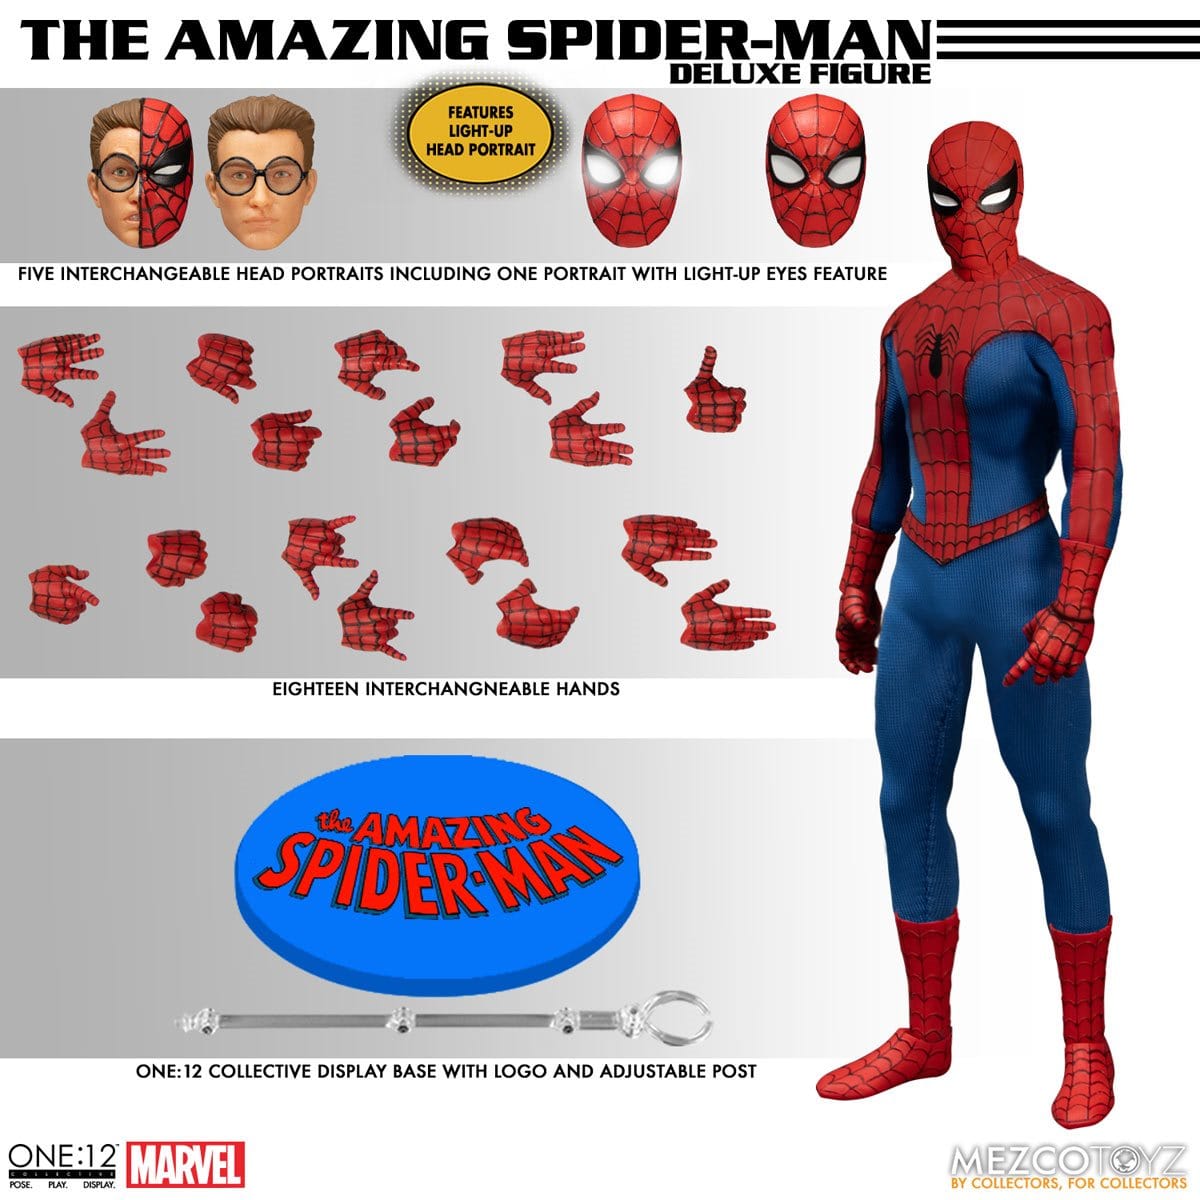 THE AMAZING SPIDER-MAN Featurette